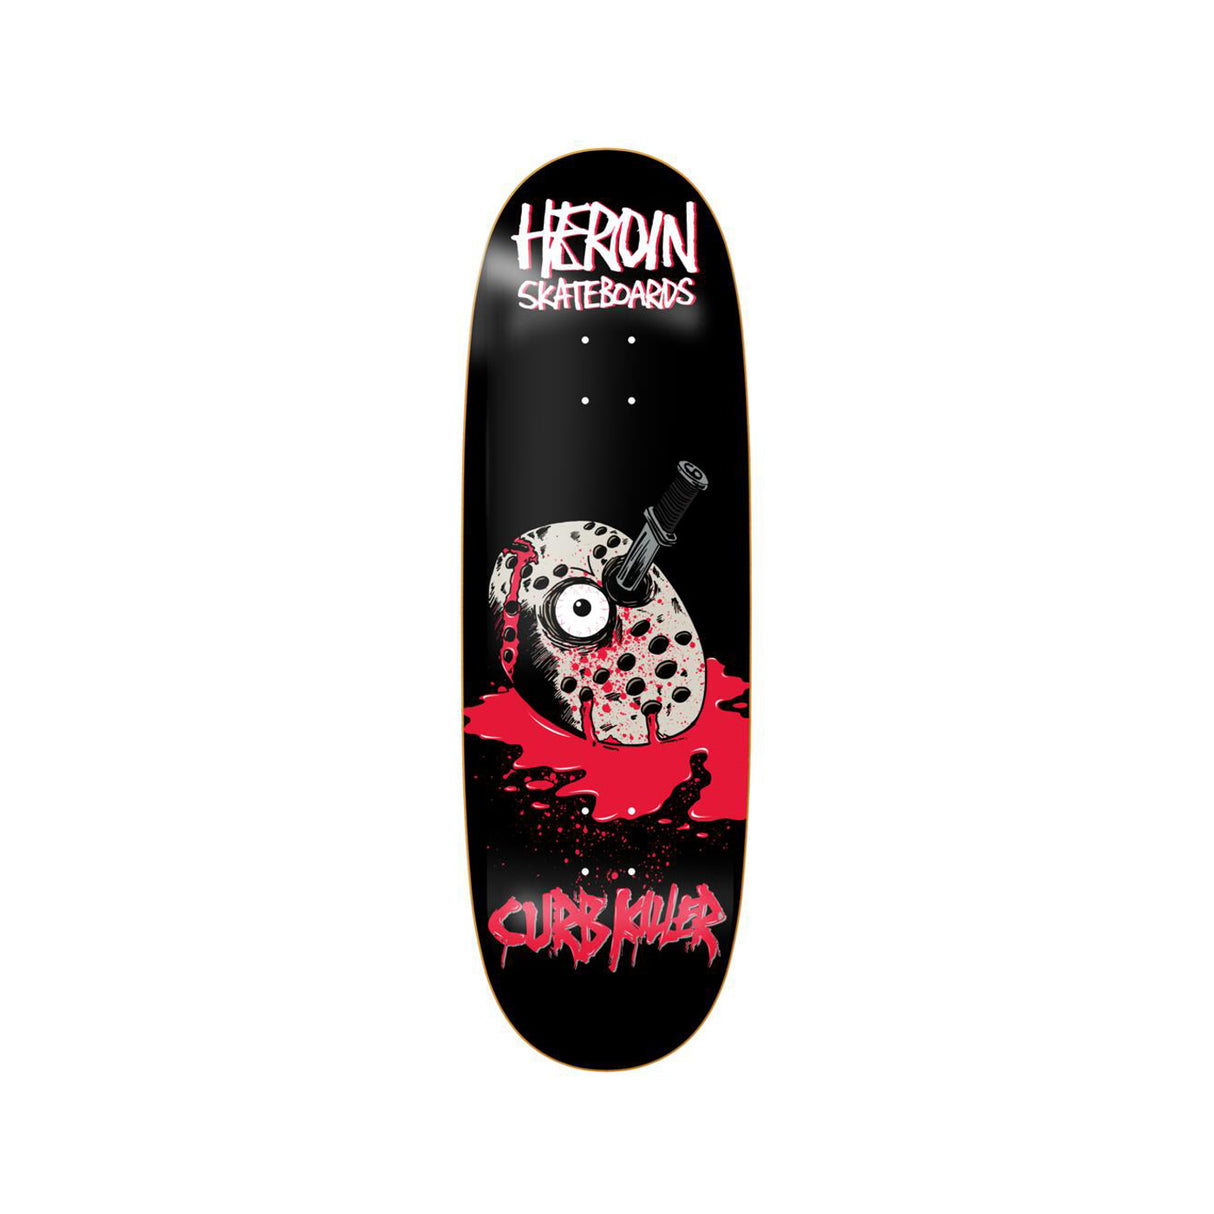 Heroin Skateboards Curb Killer 6 10.0 x 32.5 Deck w/ Pepper Grip